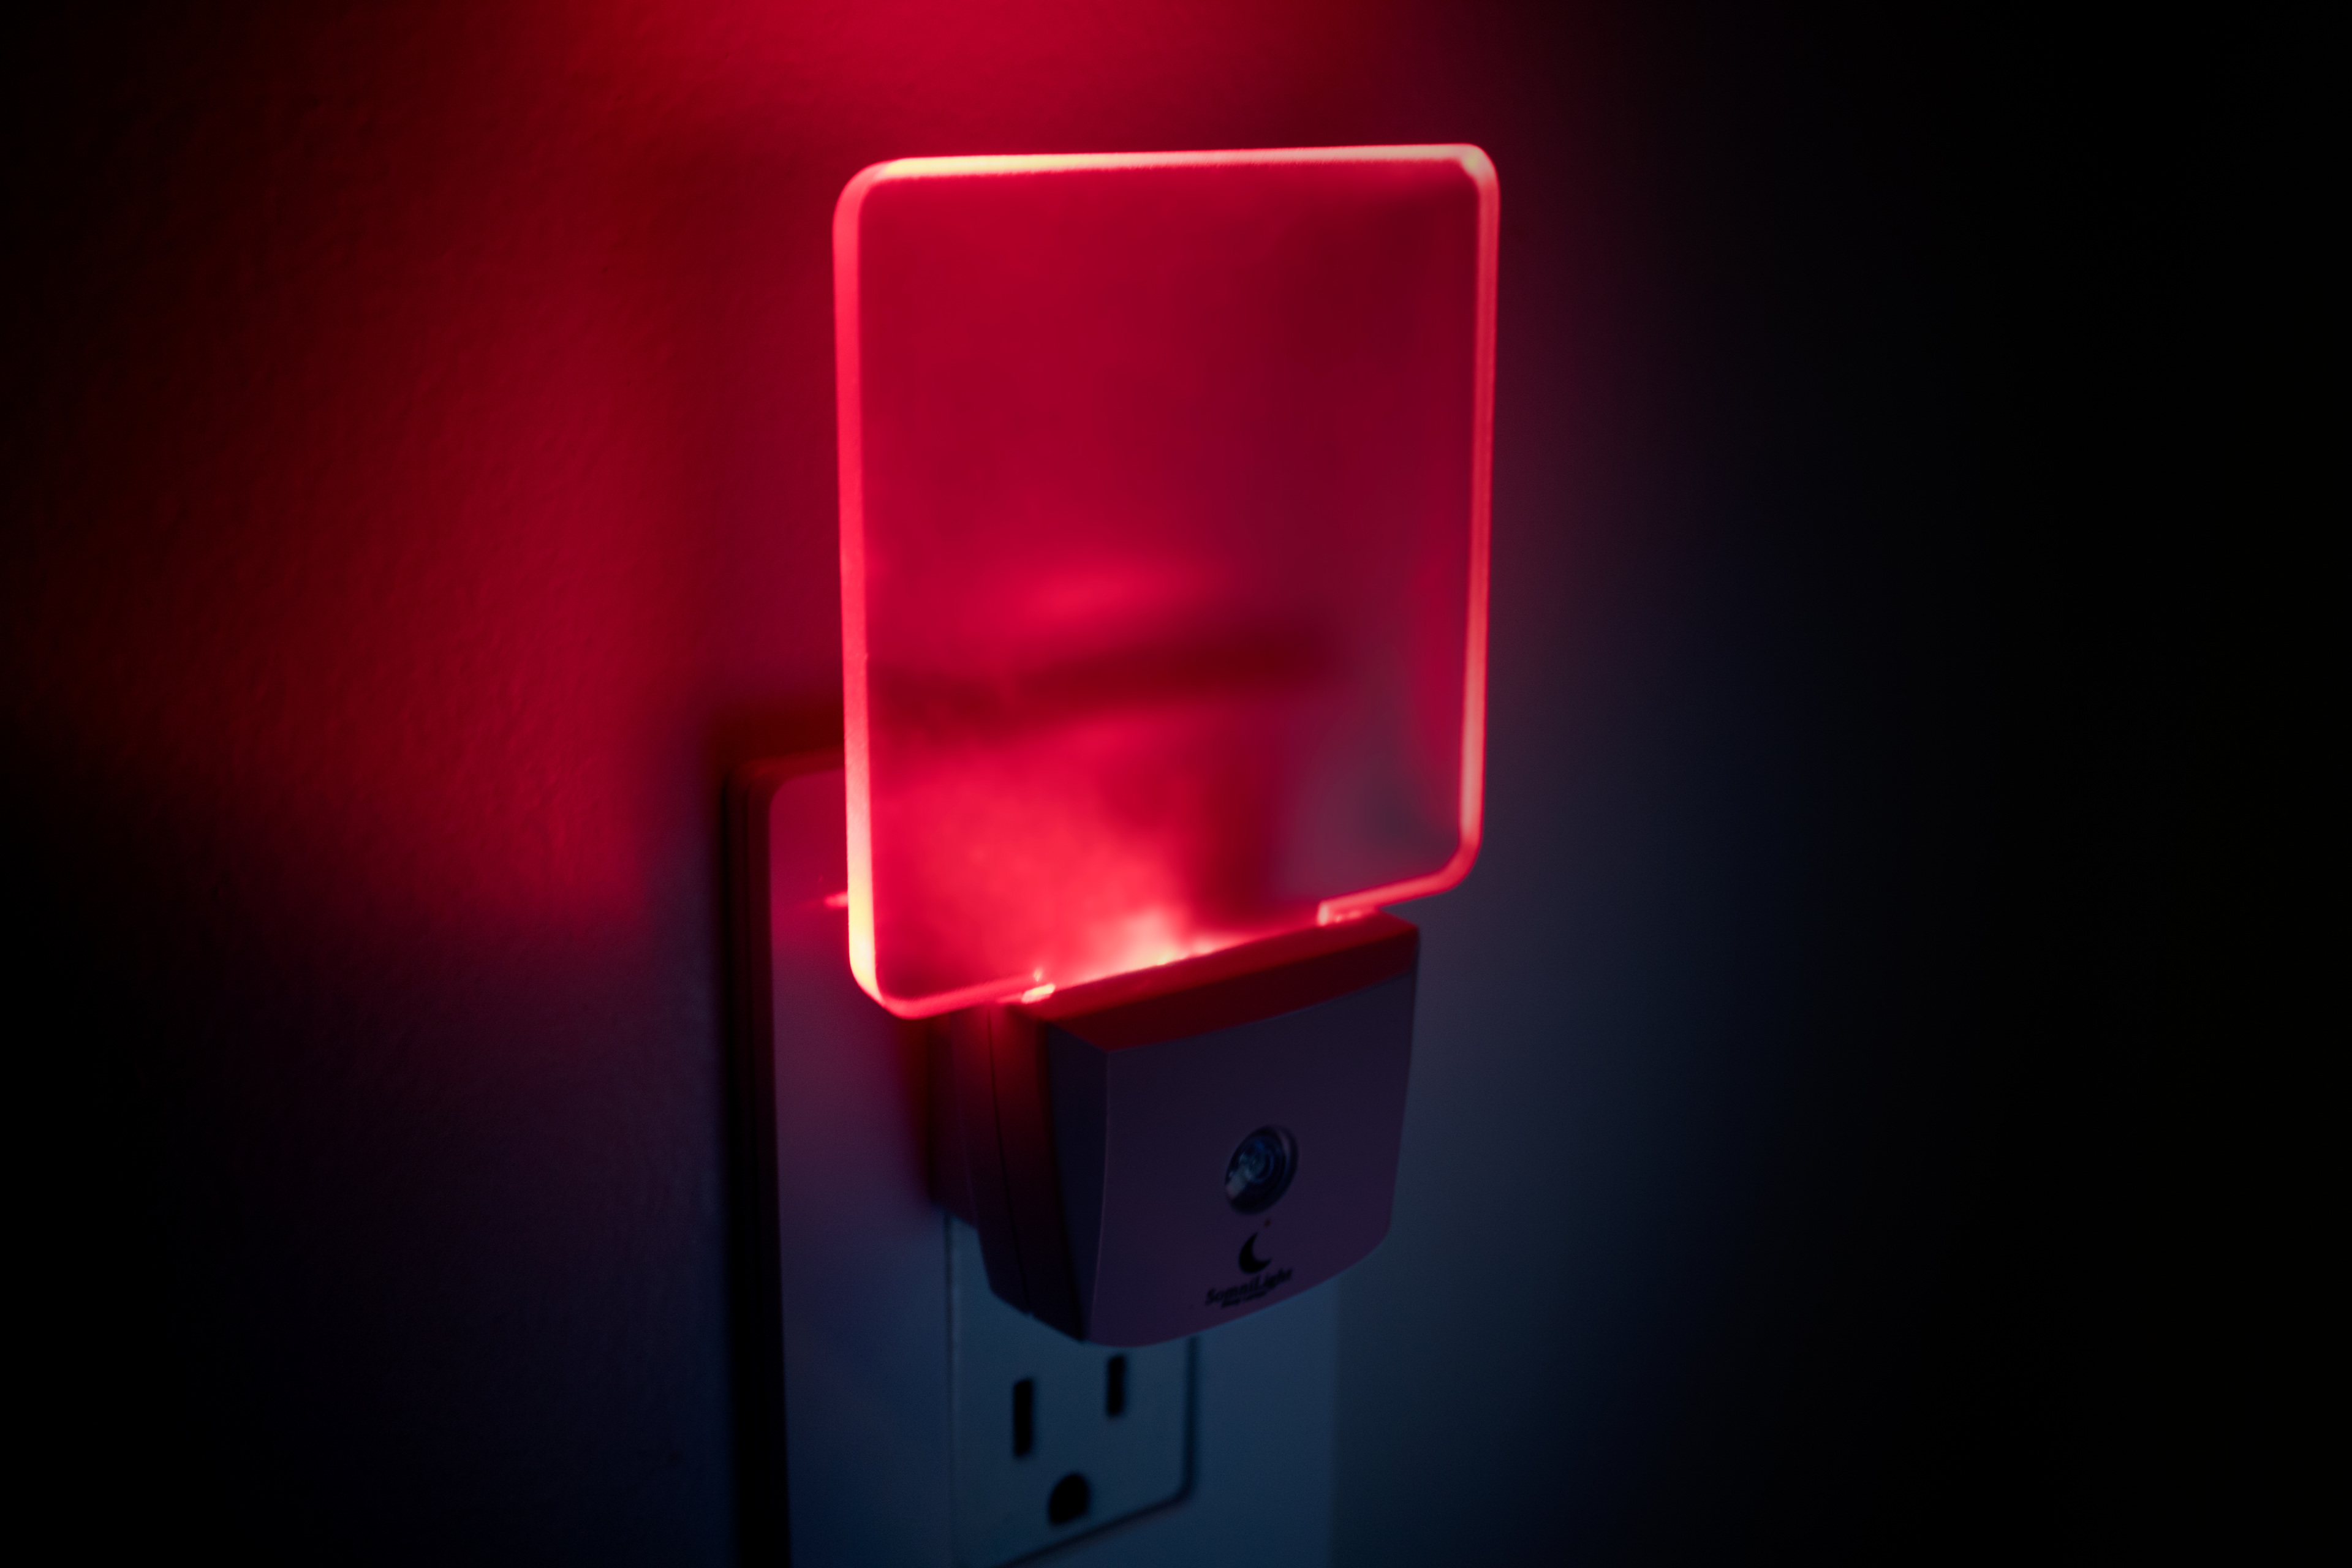 Spectra479 - Red LED Dim Night Light for Bedrooms & Bathrooms [2 Pack] -  BioRhythm Safe - (Circle)